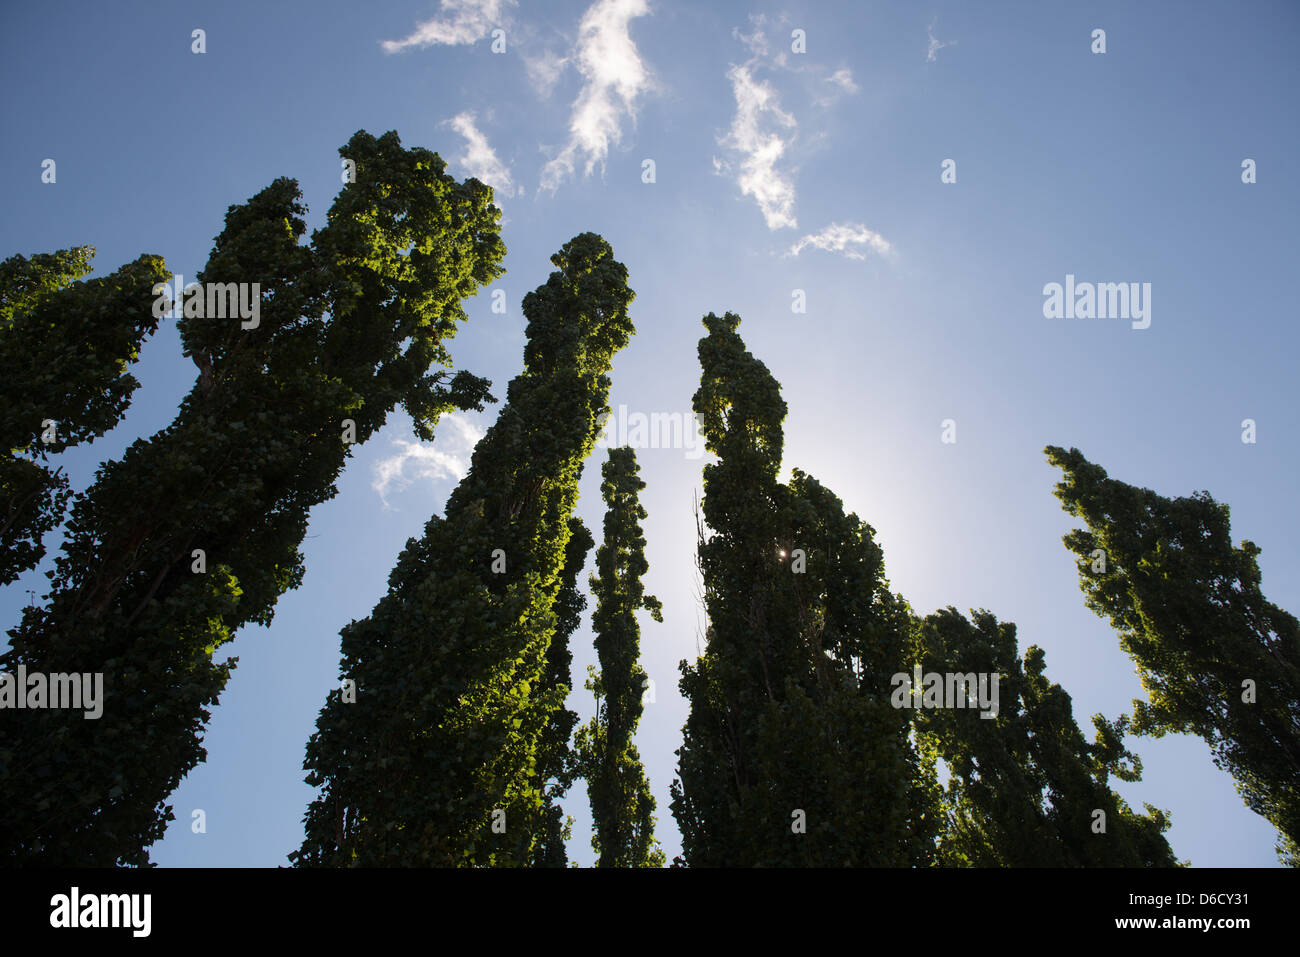 Tall shrub trees against blue sky Stock Photo